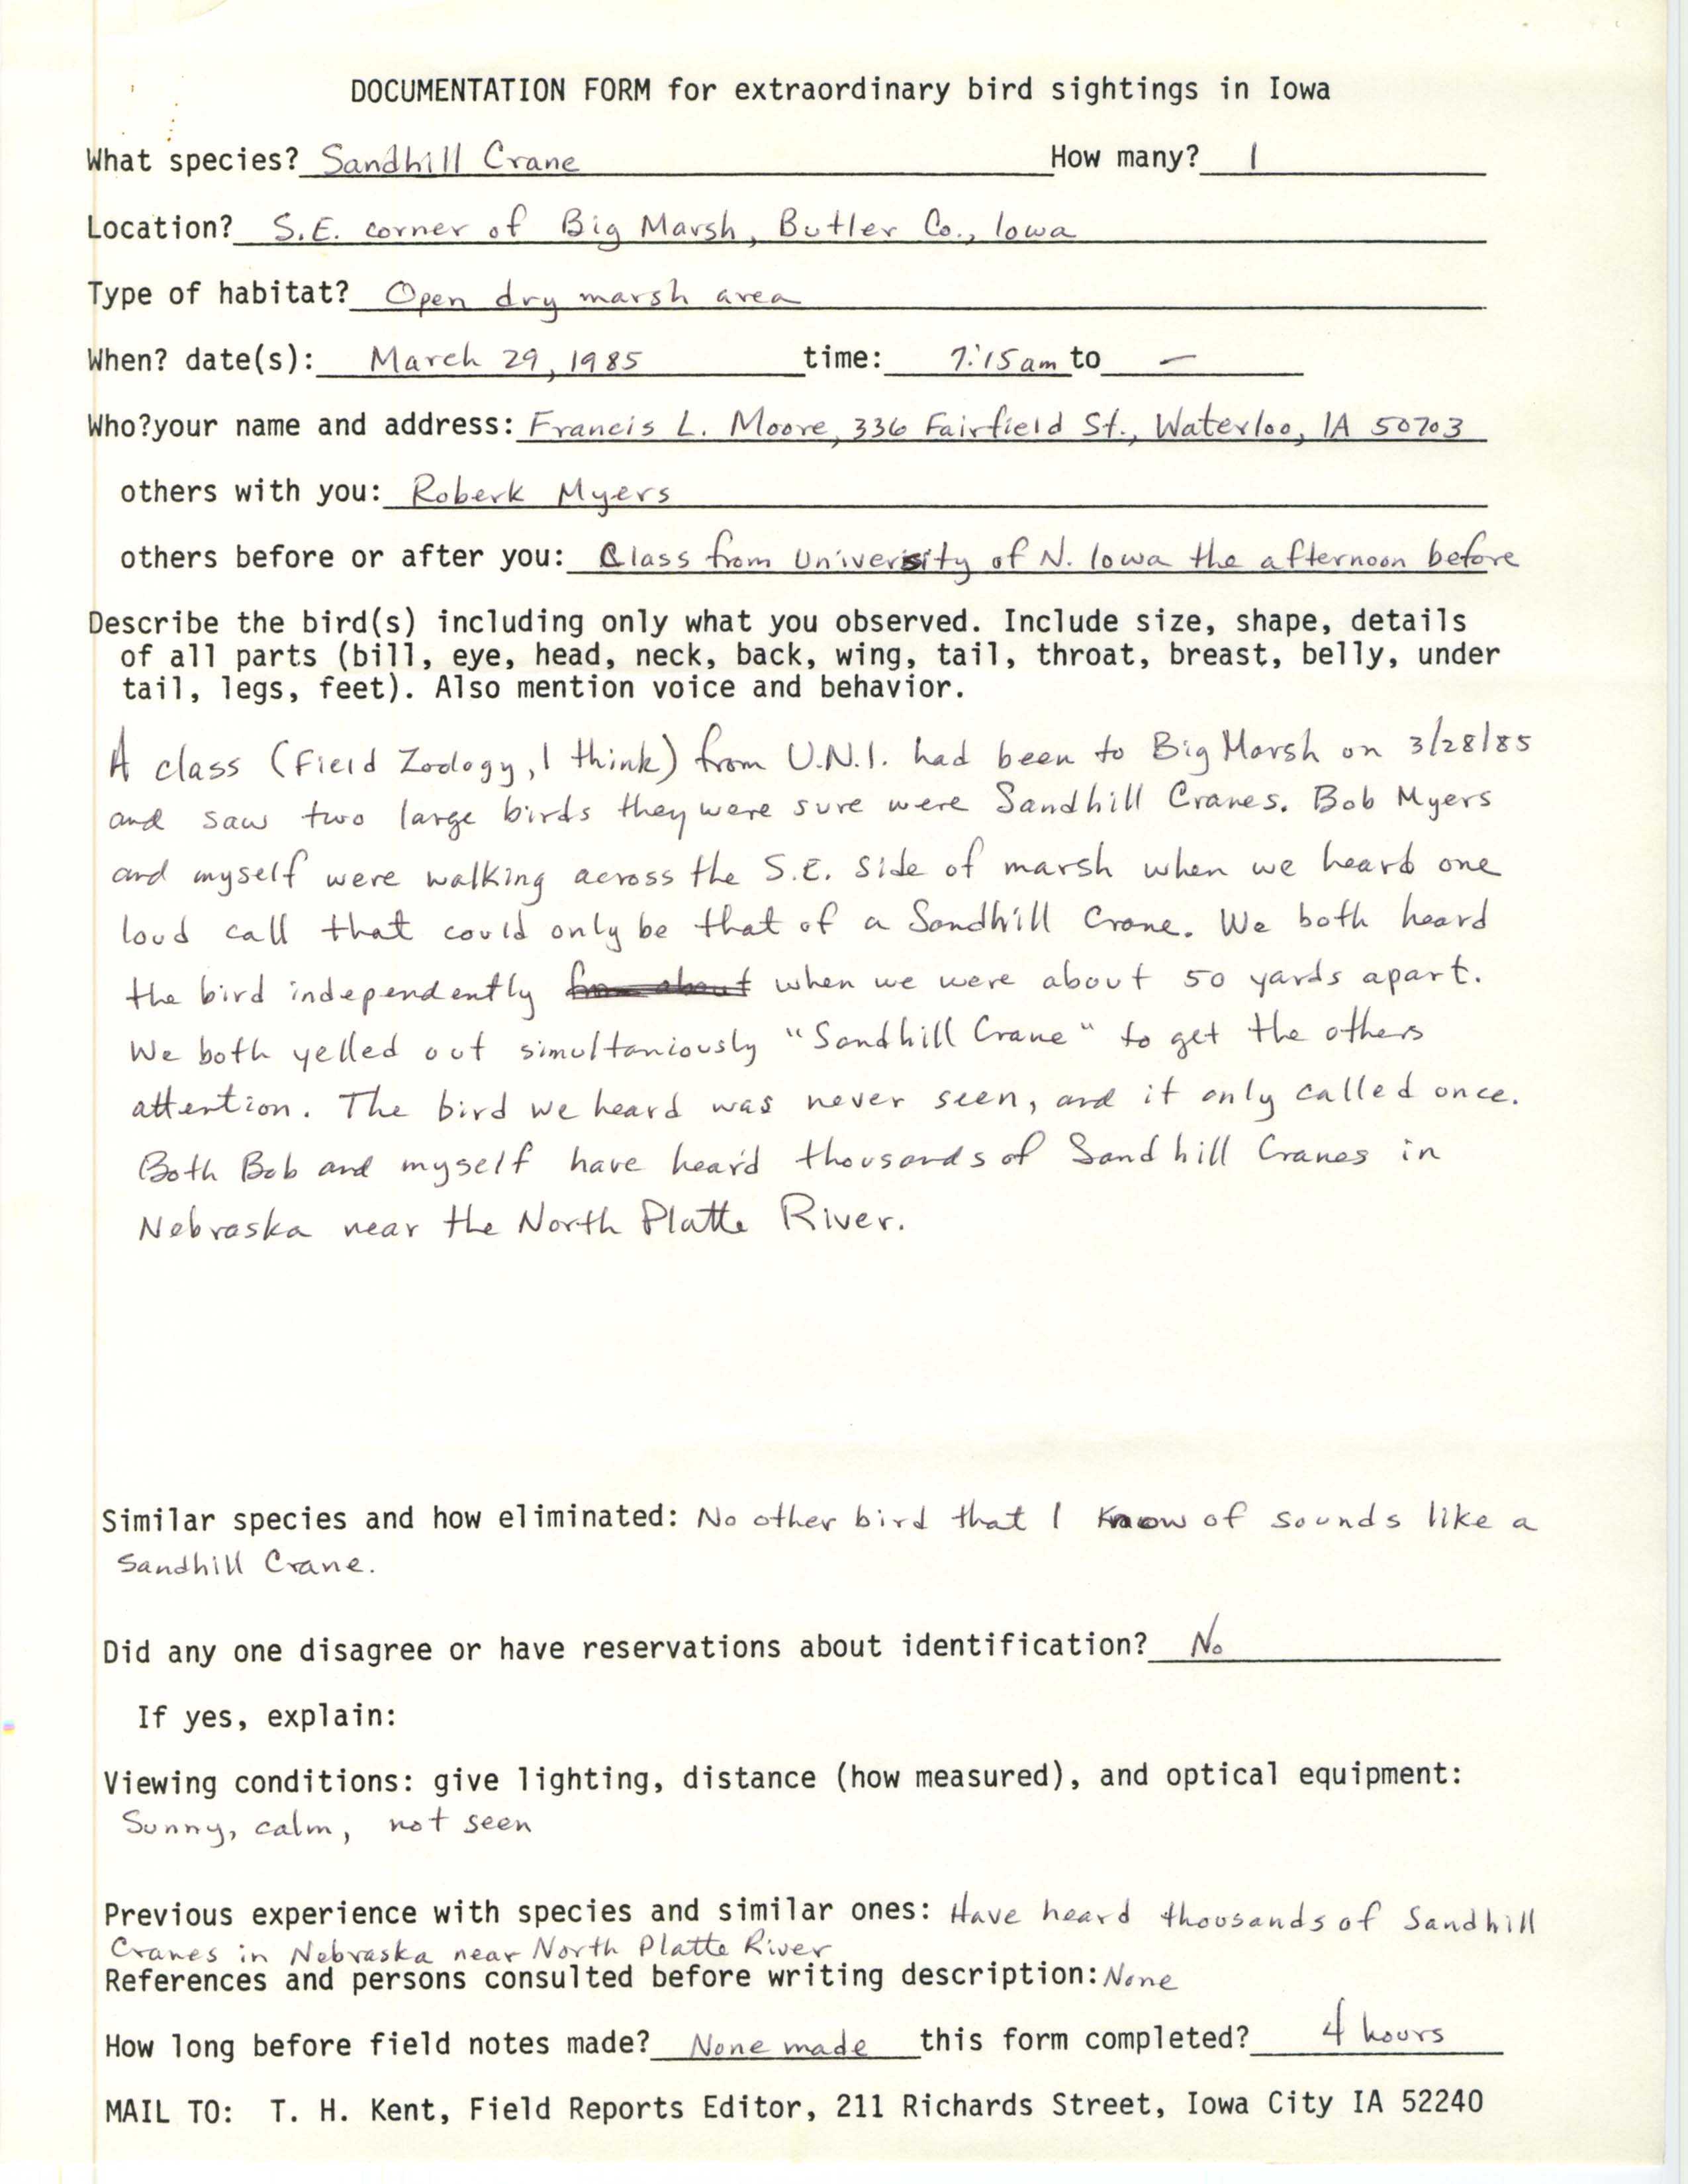 Rare bird documentation form for Sandhill Crane at Big Marsh in 1985